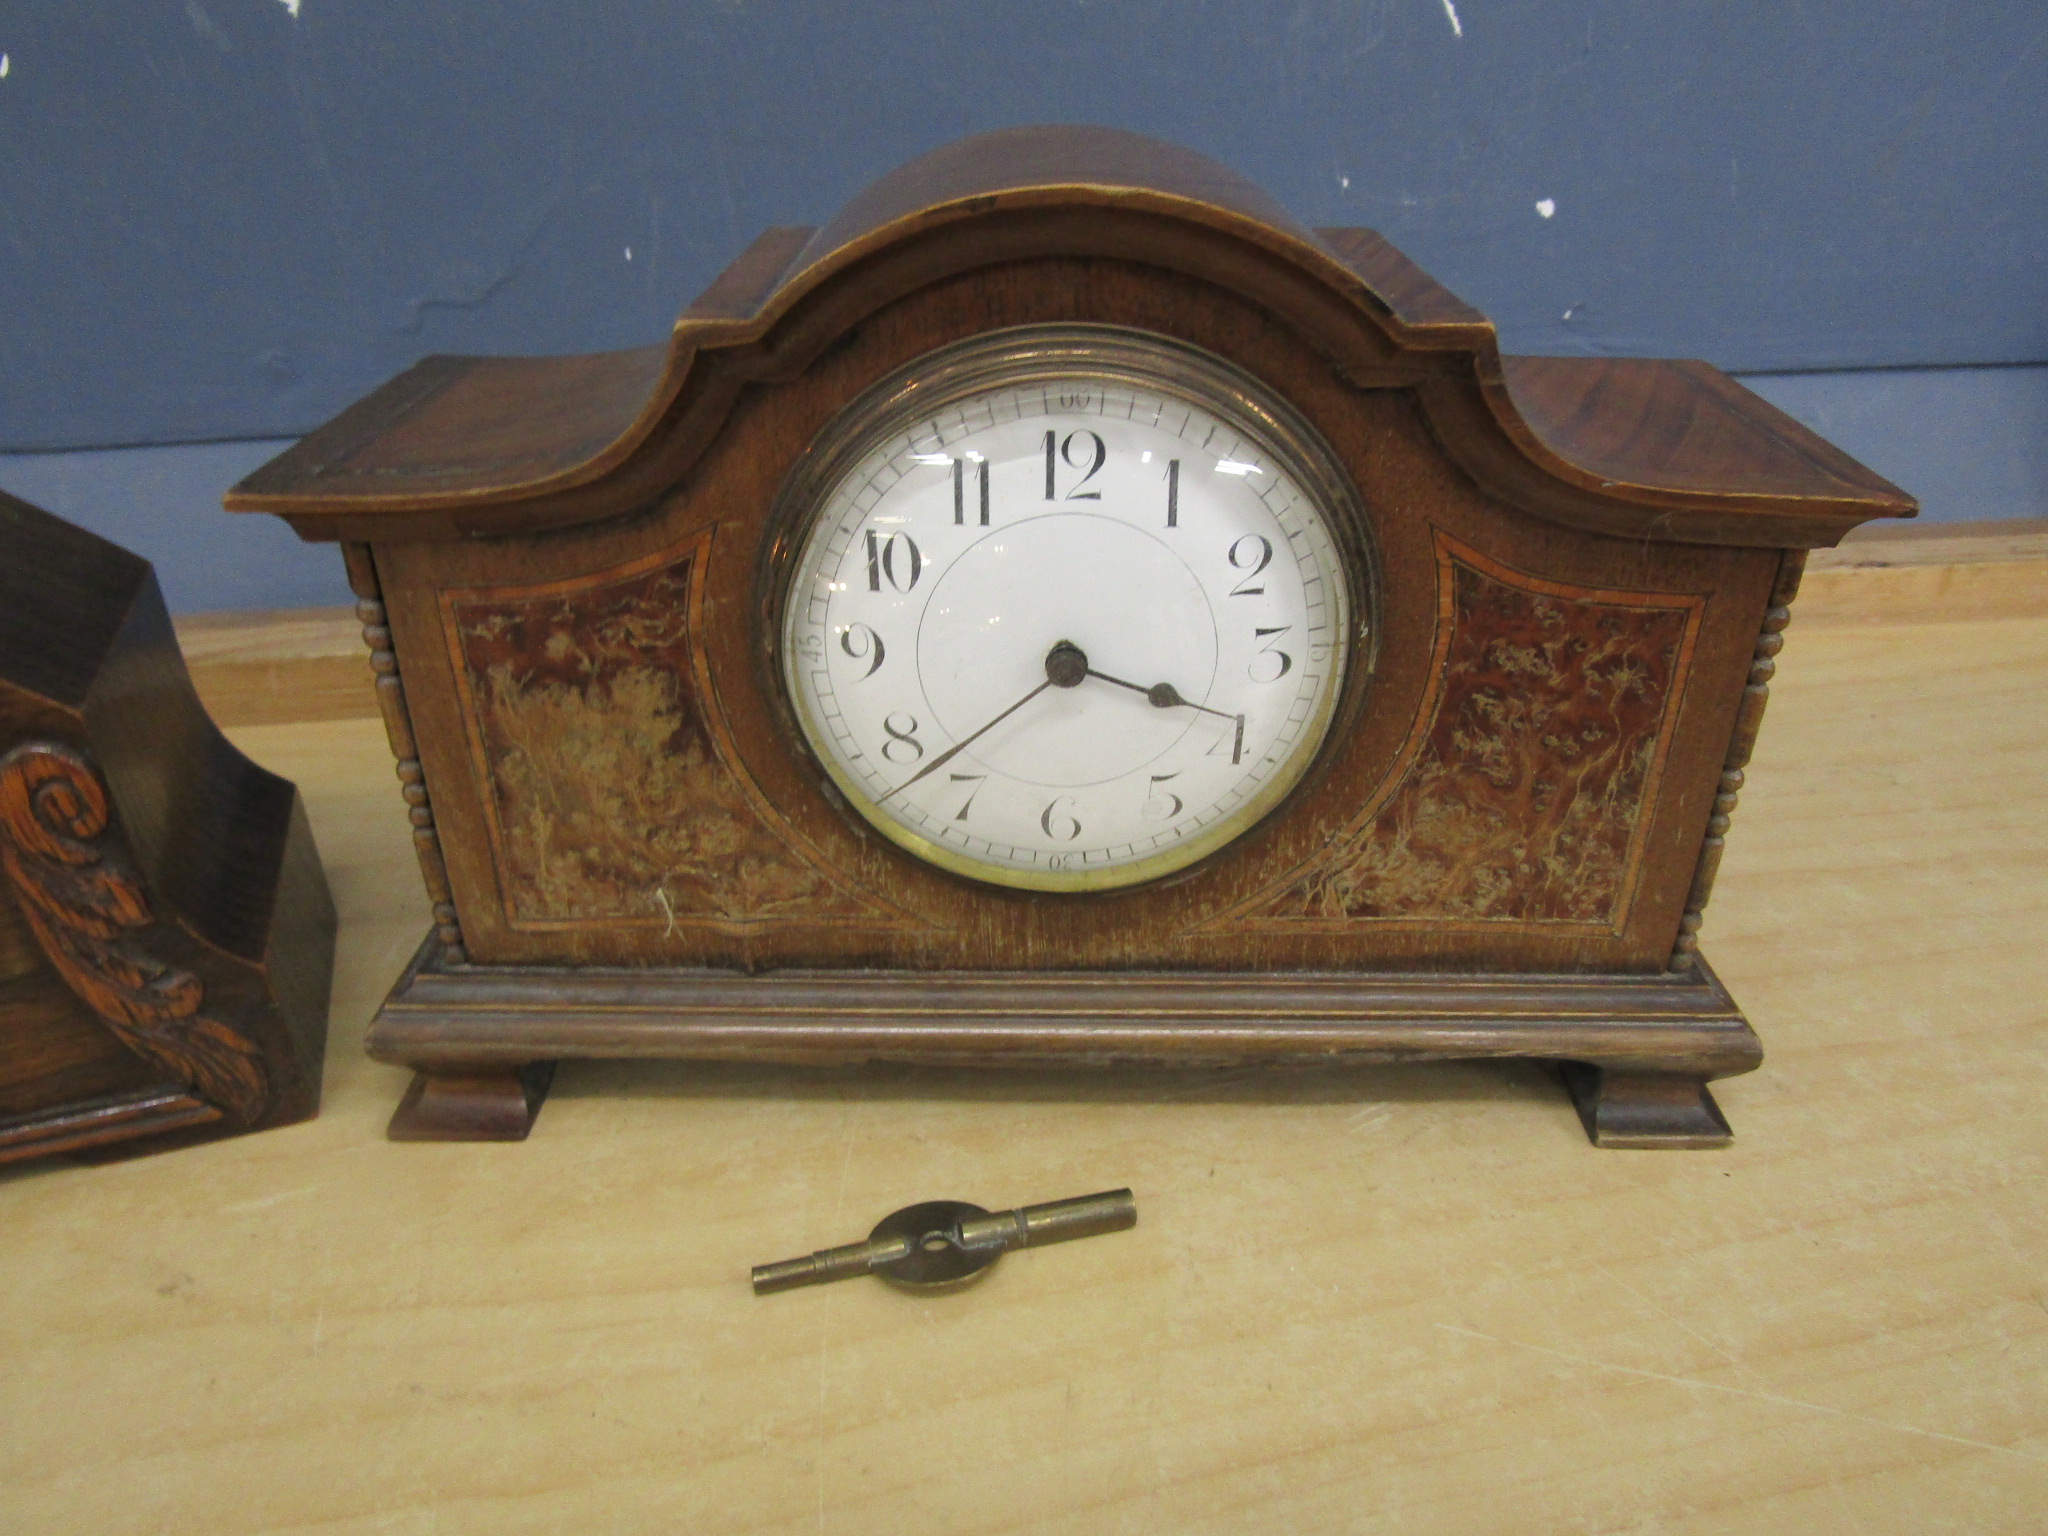 2 Wooden cased mantel clocks - Image 3 of 4